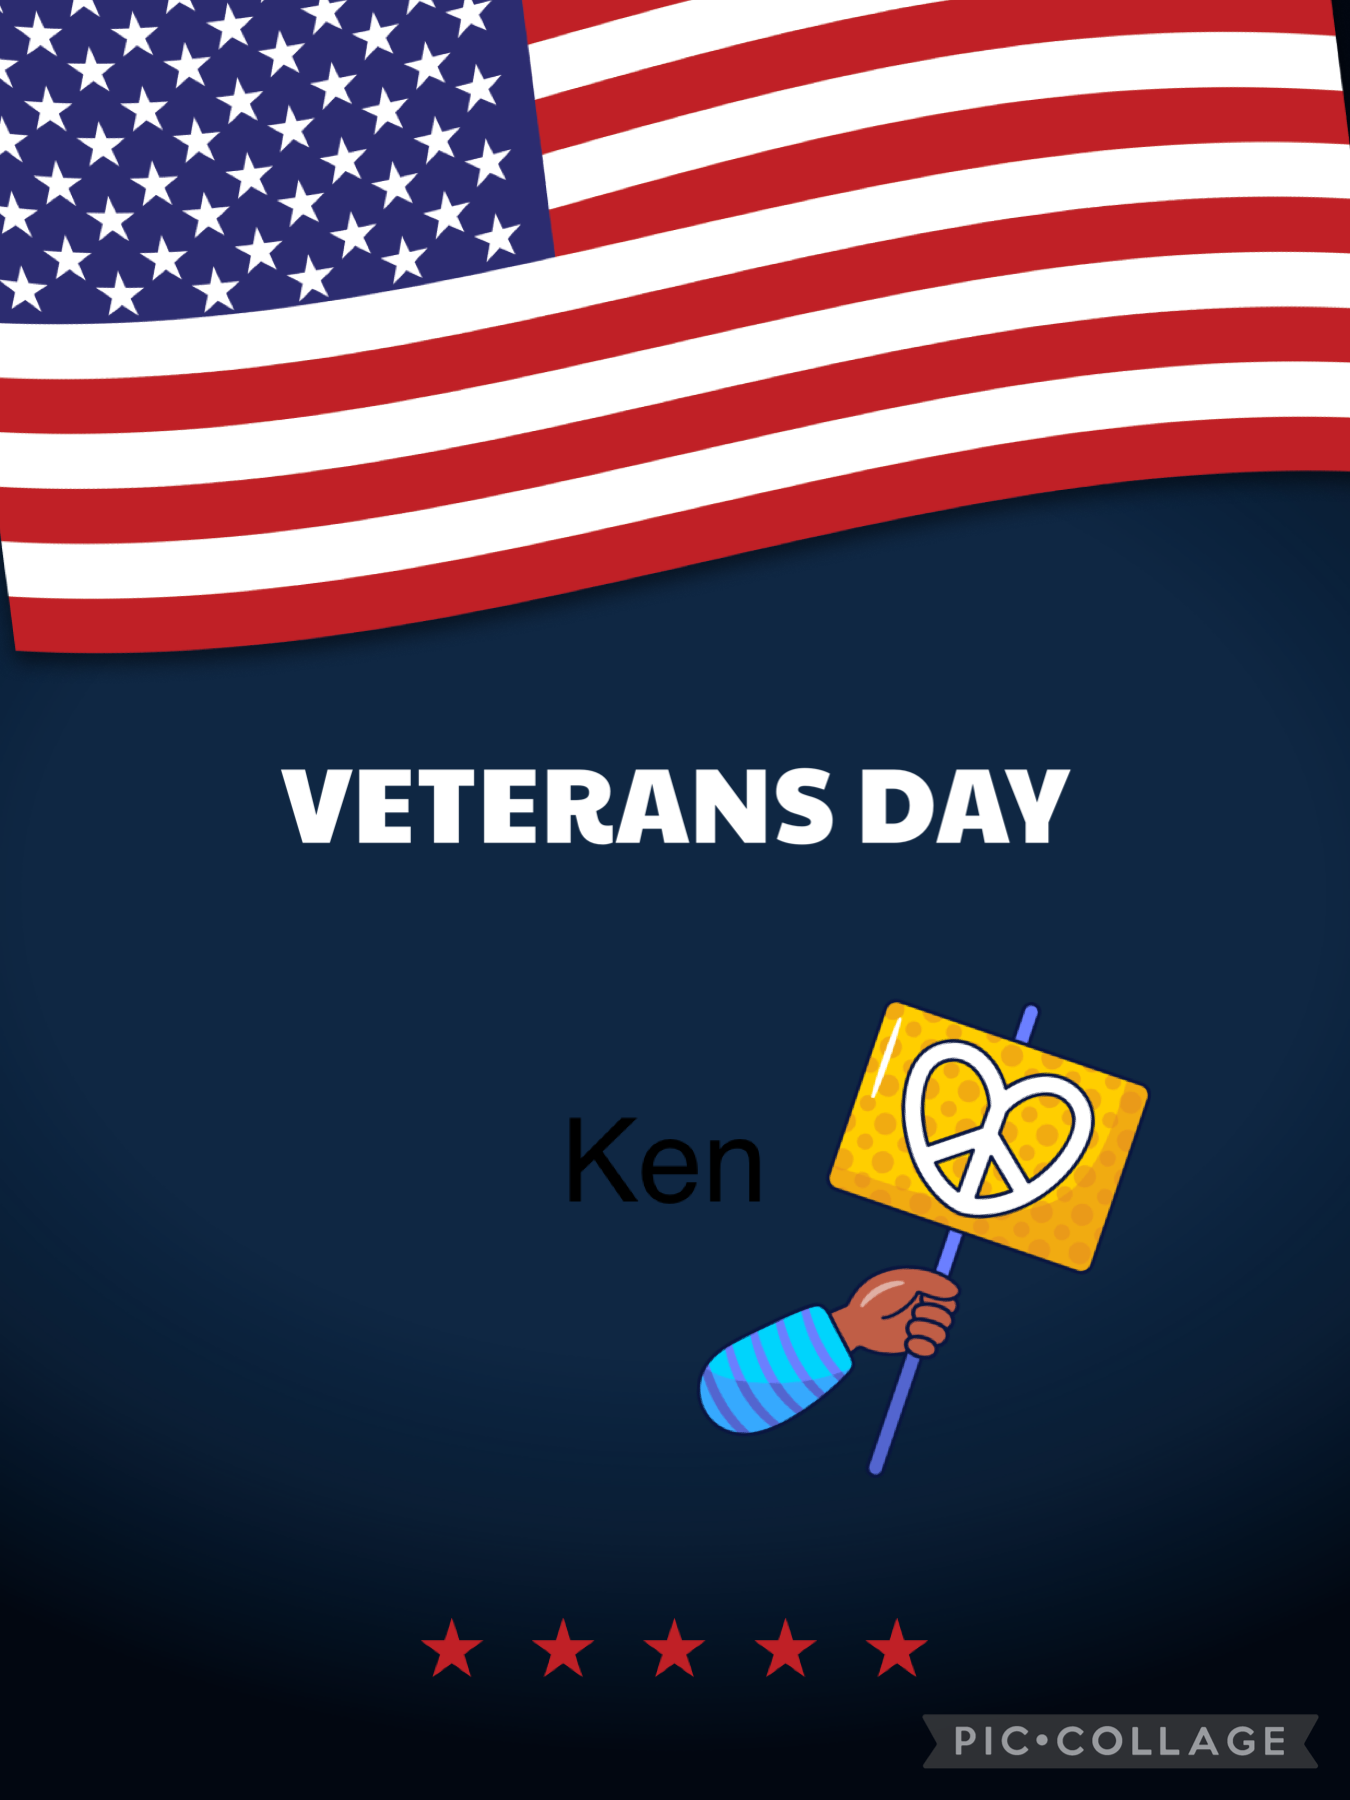 #veterans day